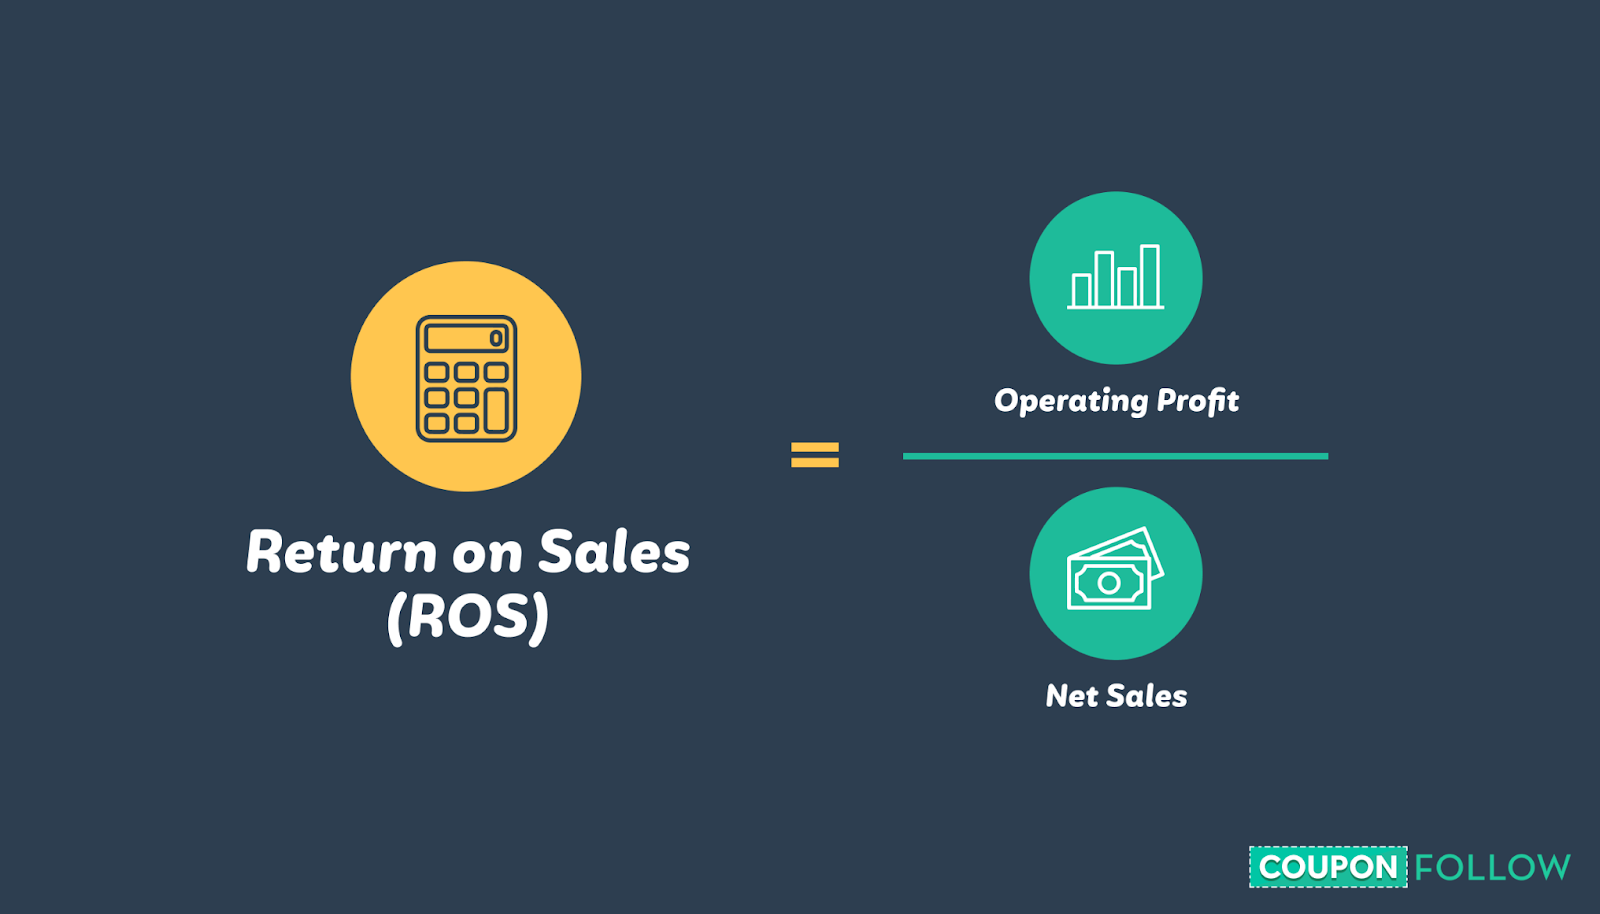 Image showing the return on sales formula